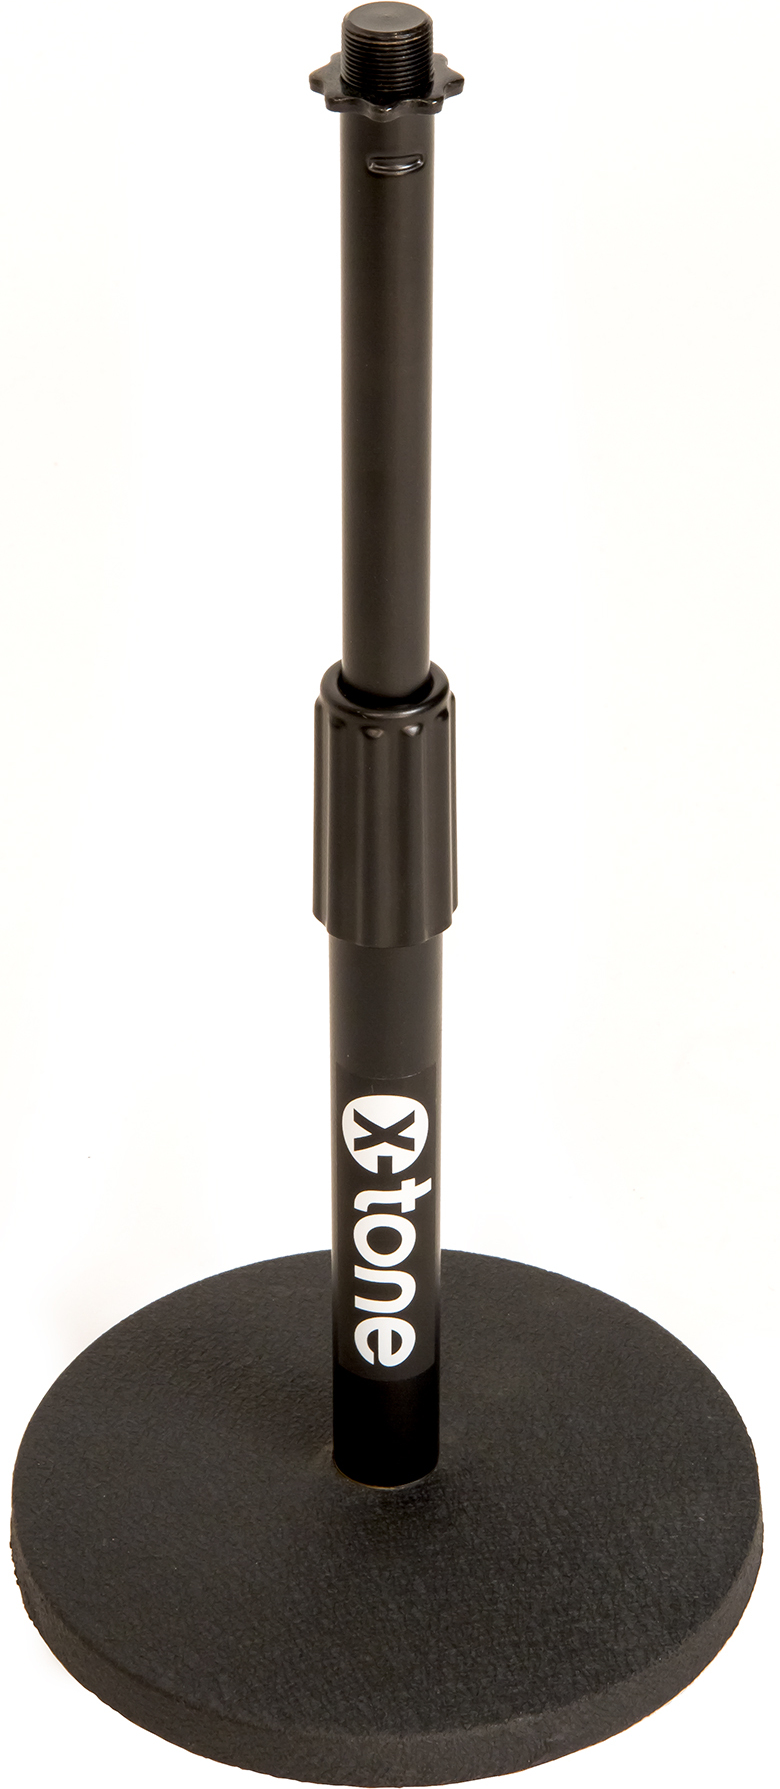 X-tone Xh 6010 Pied Micro De Table - Soporte de micrófono - Main picture